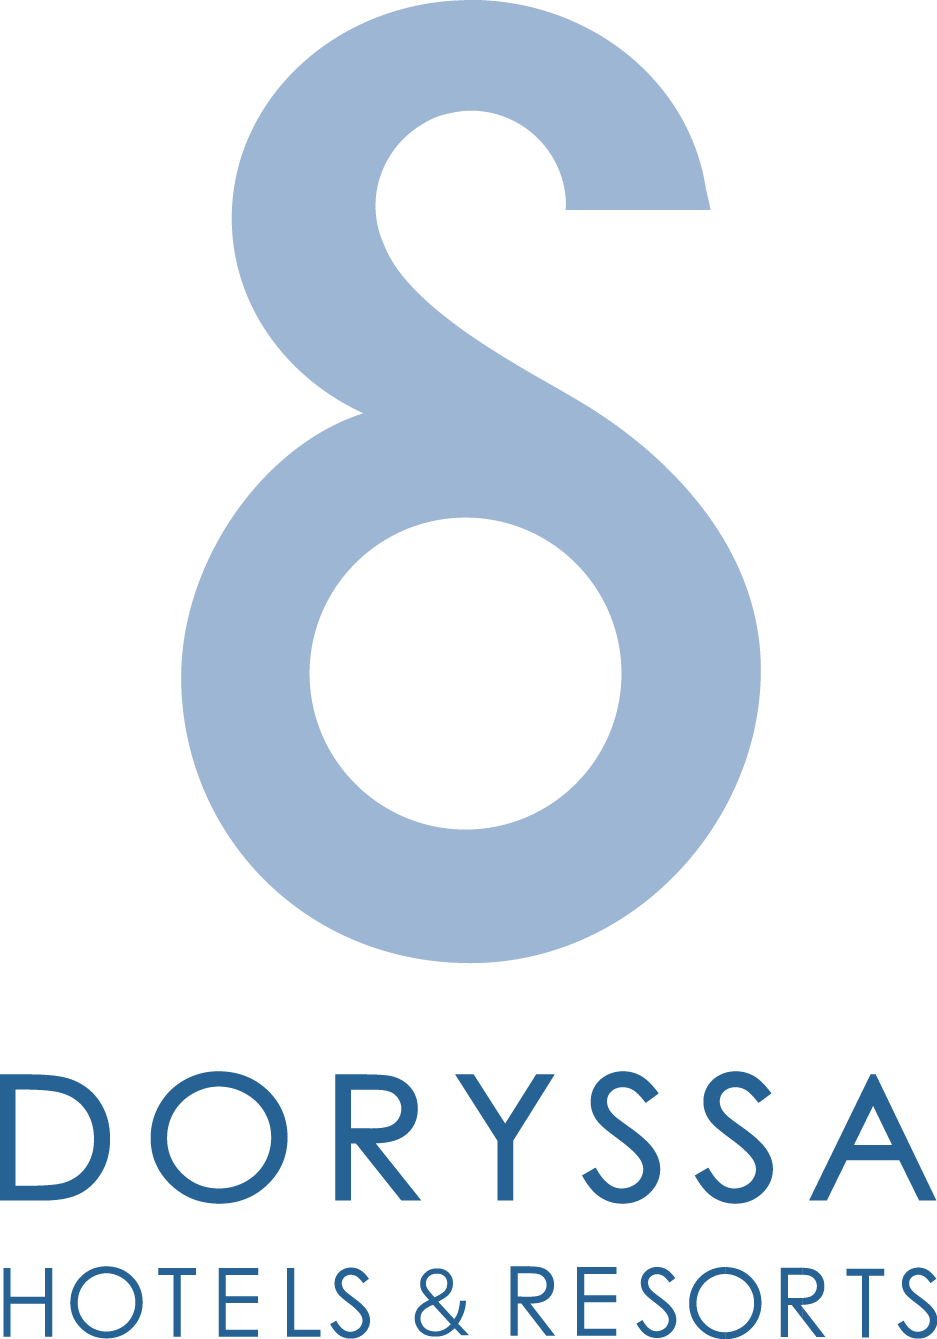 Doryssa hotels & Resports